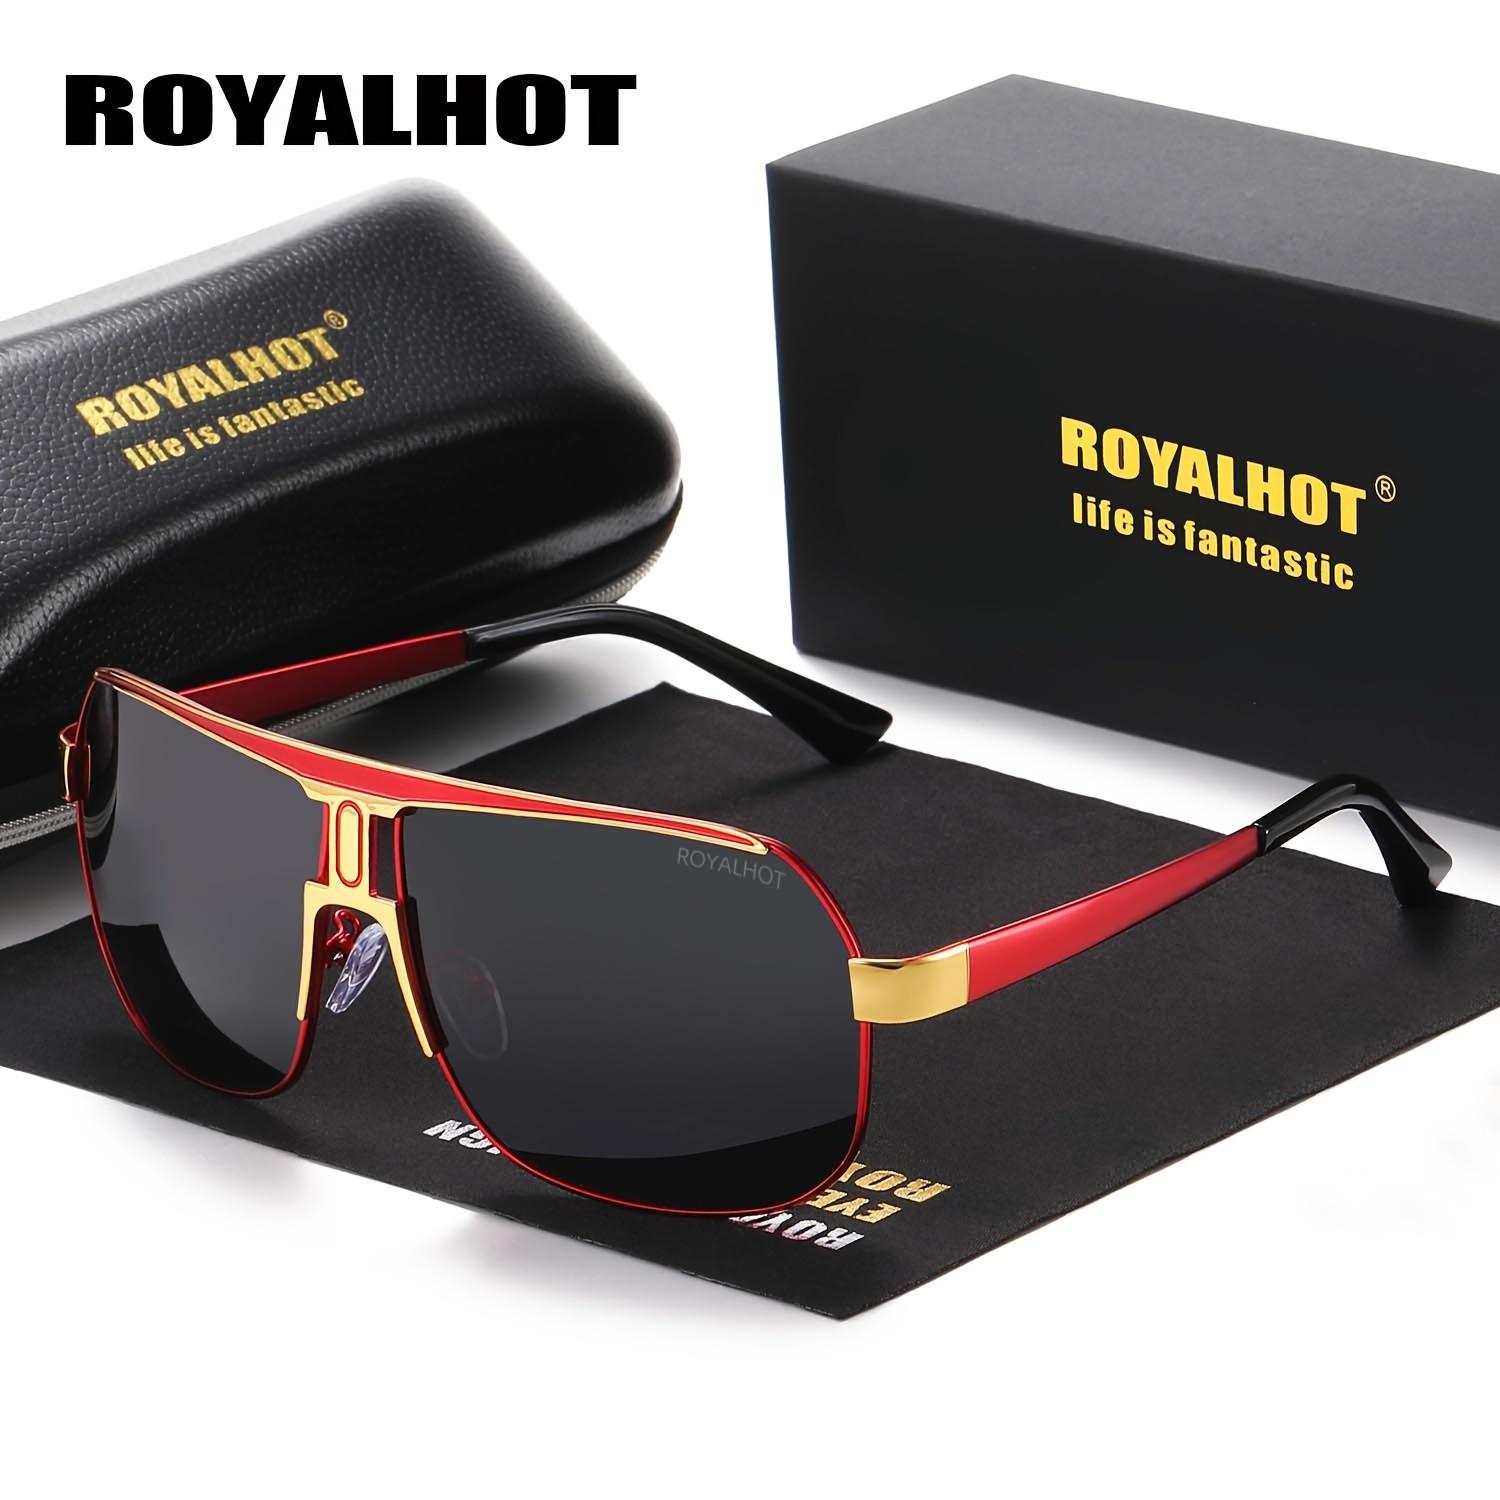 Hot sale products Sunglasses Polarized Men